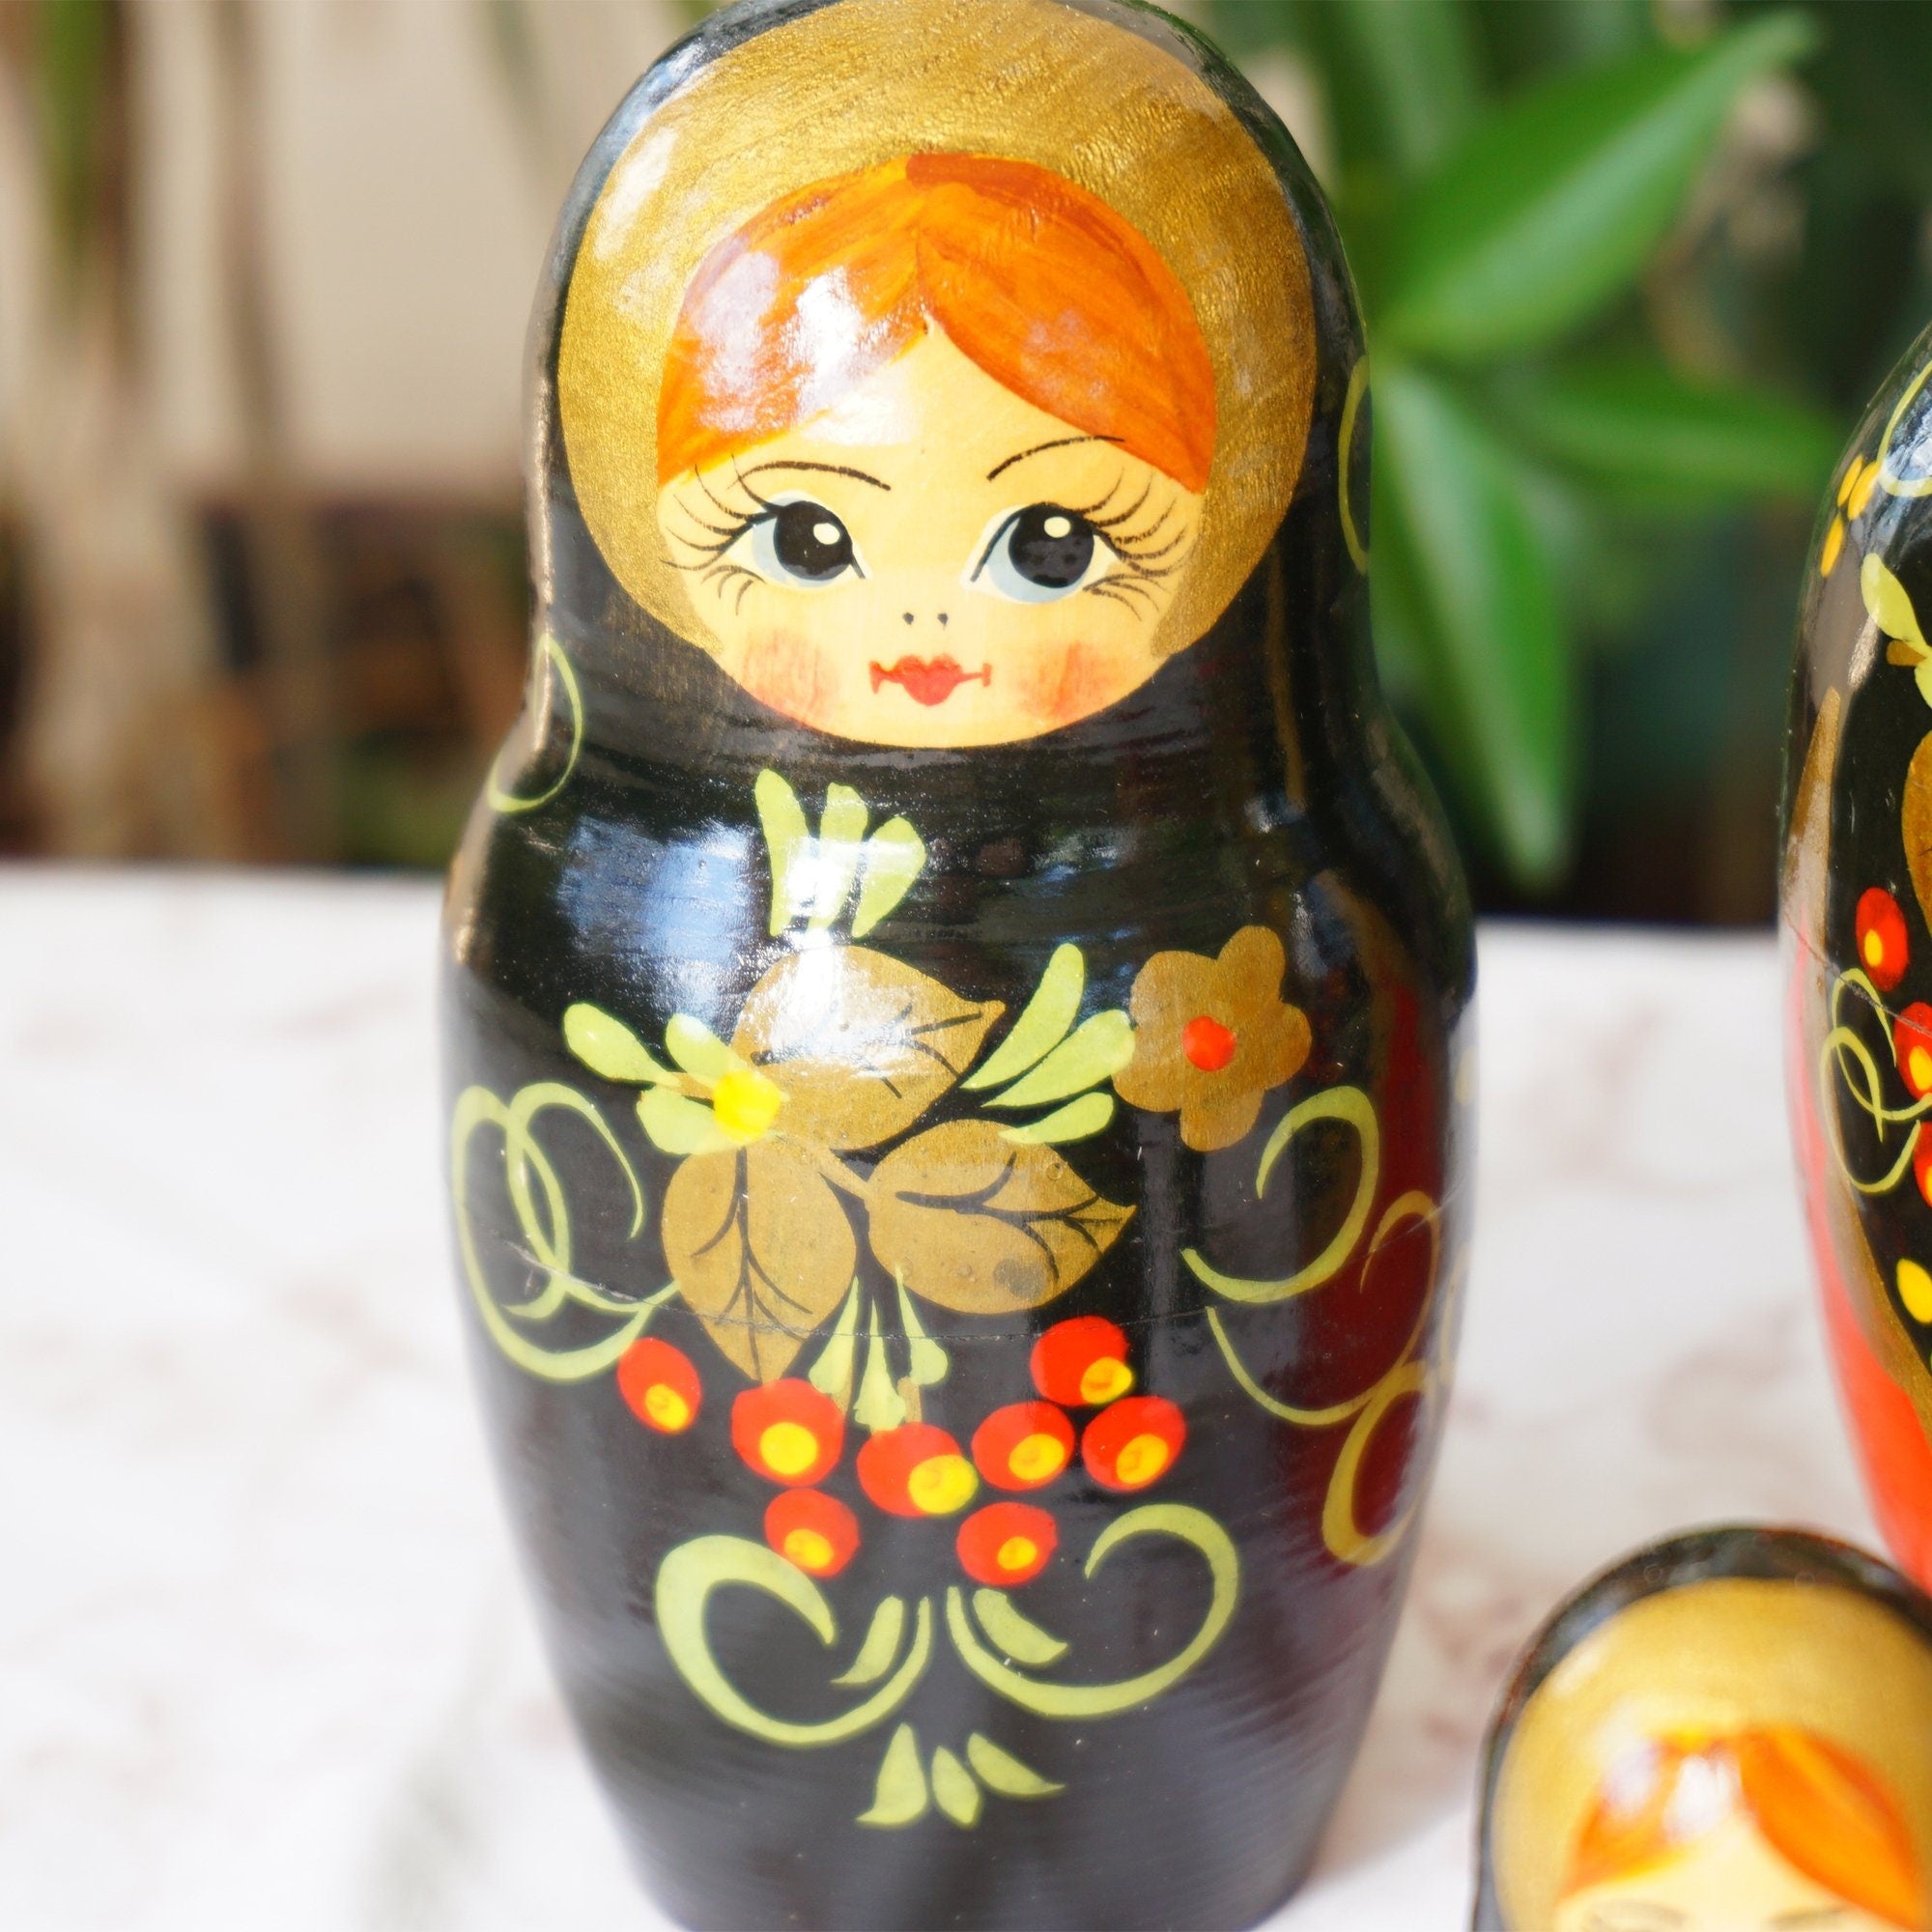 Hand Painted Wood Matryoshka "Матрёшка". Traditional Russian Nesting Dolls.  Set of 5.